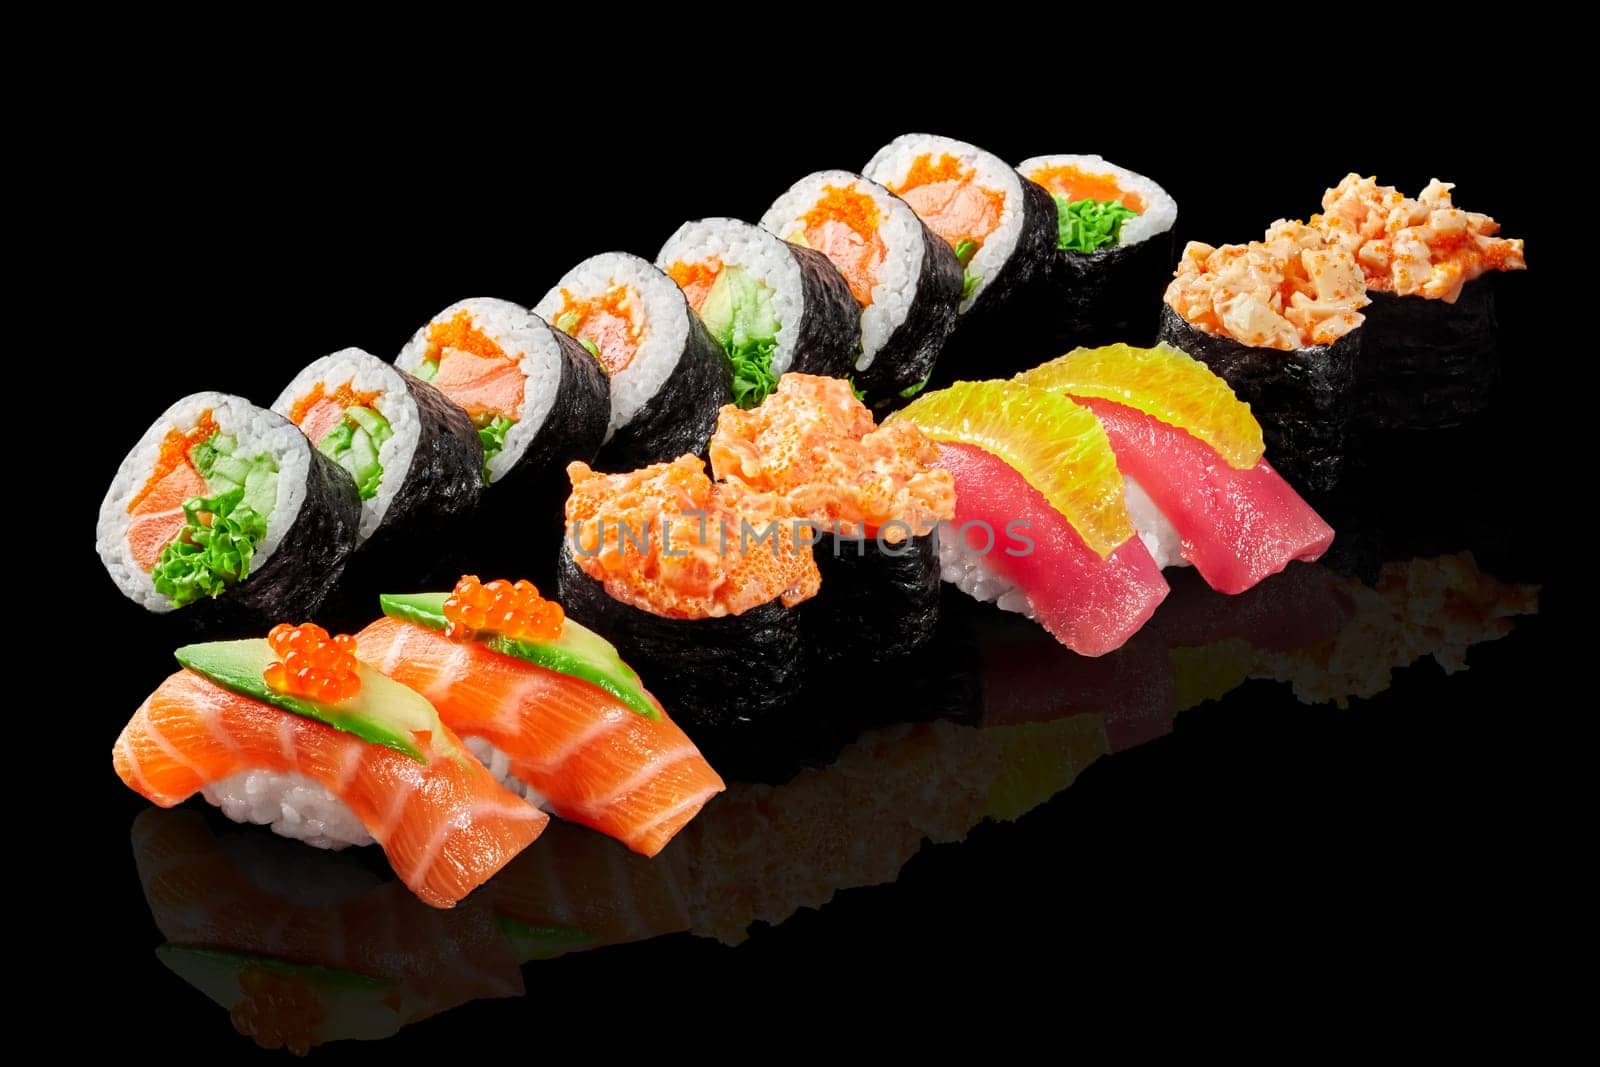 Enticing vibrant set of futomaki, gunkan maki and nigiri sushi with salmon and tuna garnished with caviar, cucumber and orange pulp, presented on reflective black surface. Japanese fusion cuisine